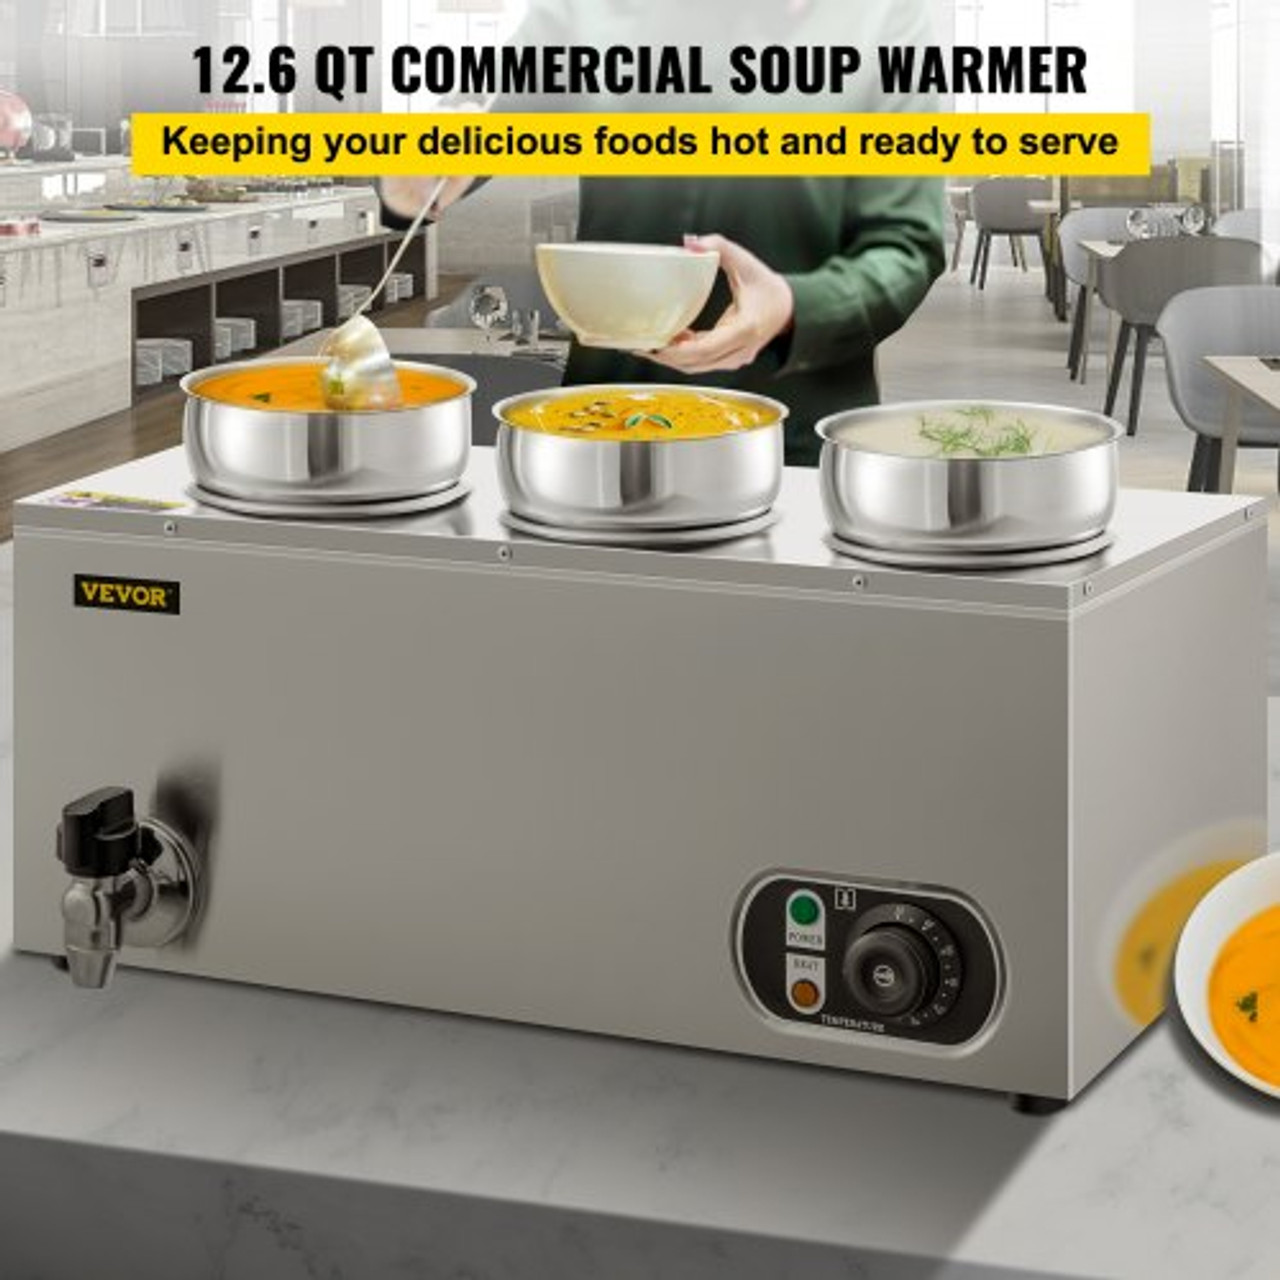 VEVOR 110V Commercial Soup Warmer 29.6 Qt Capacity, 1500W Electric